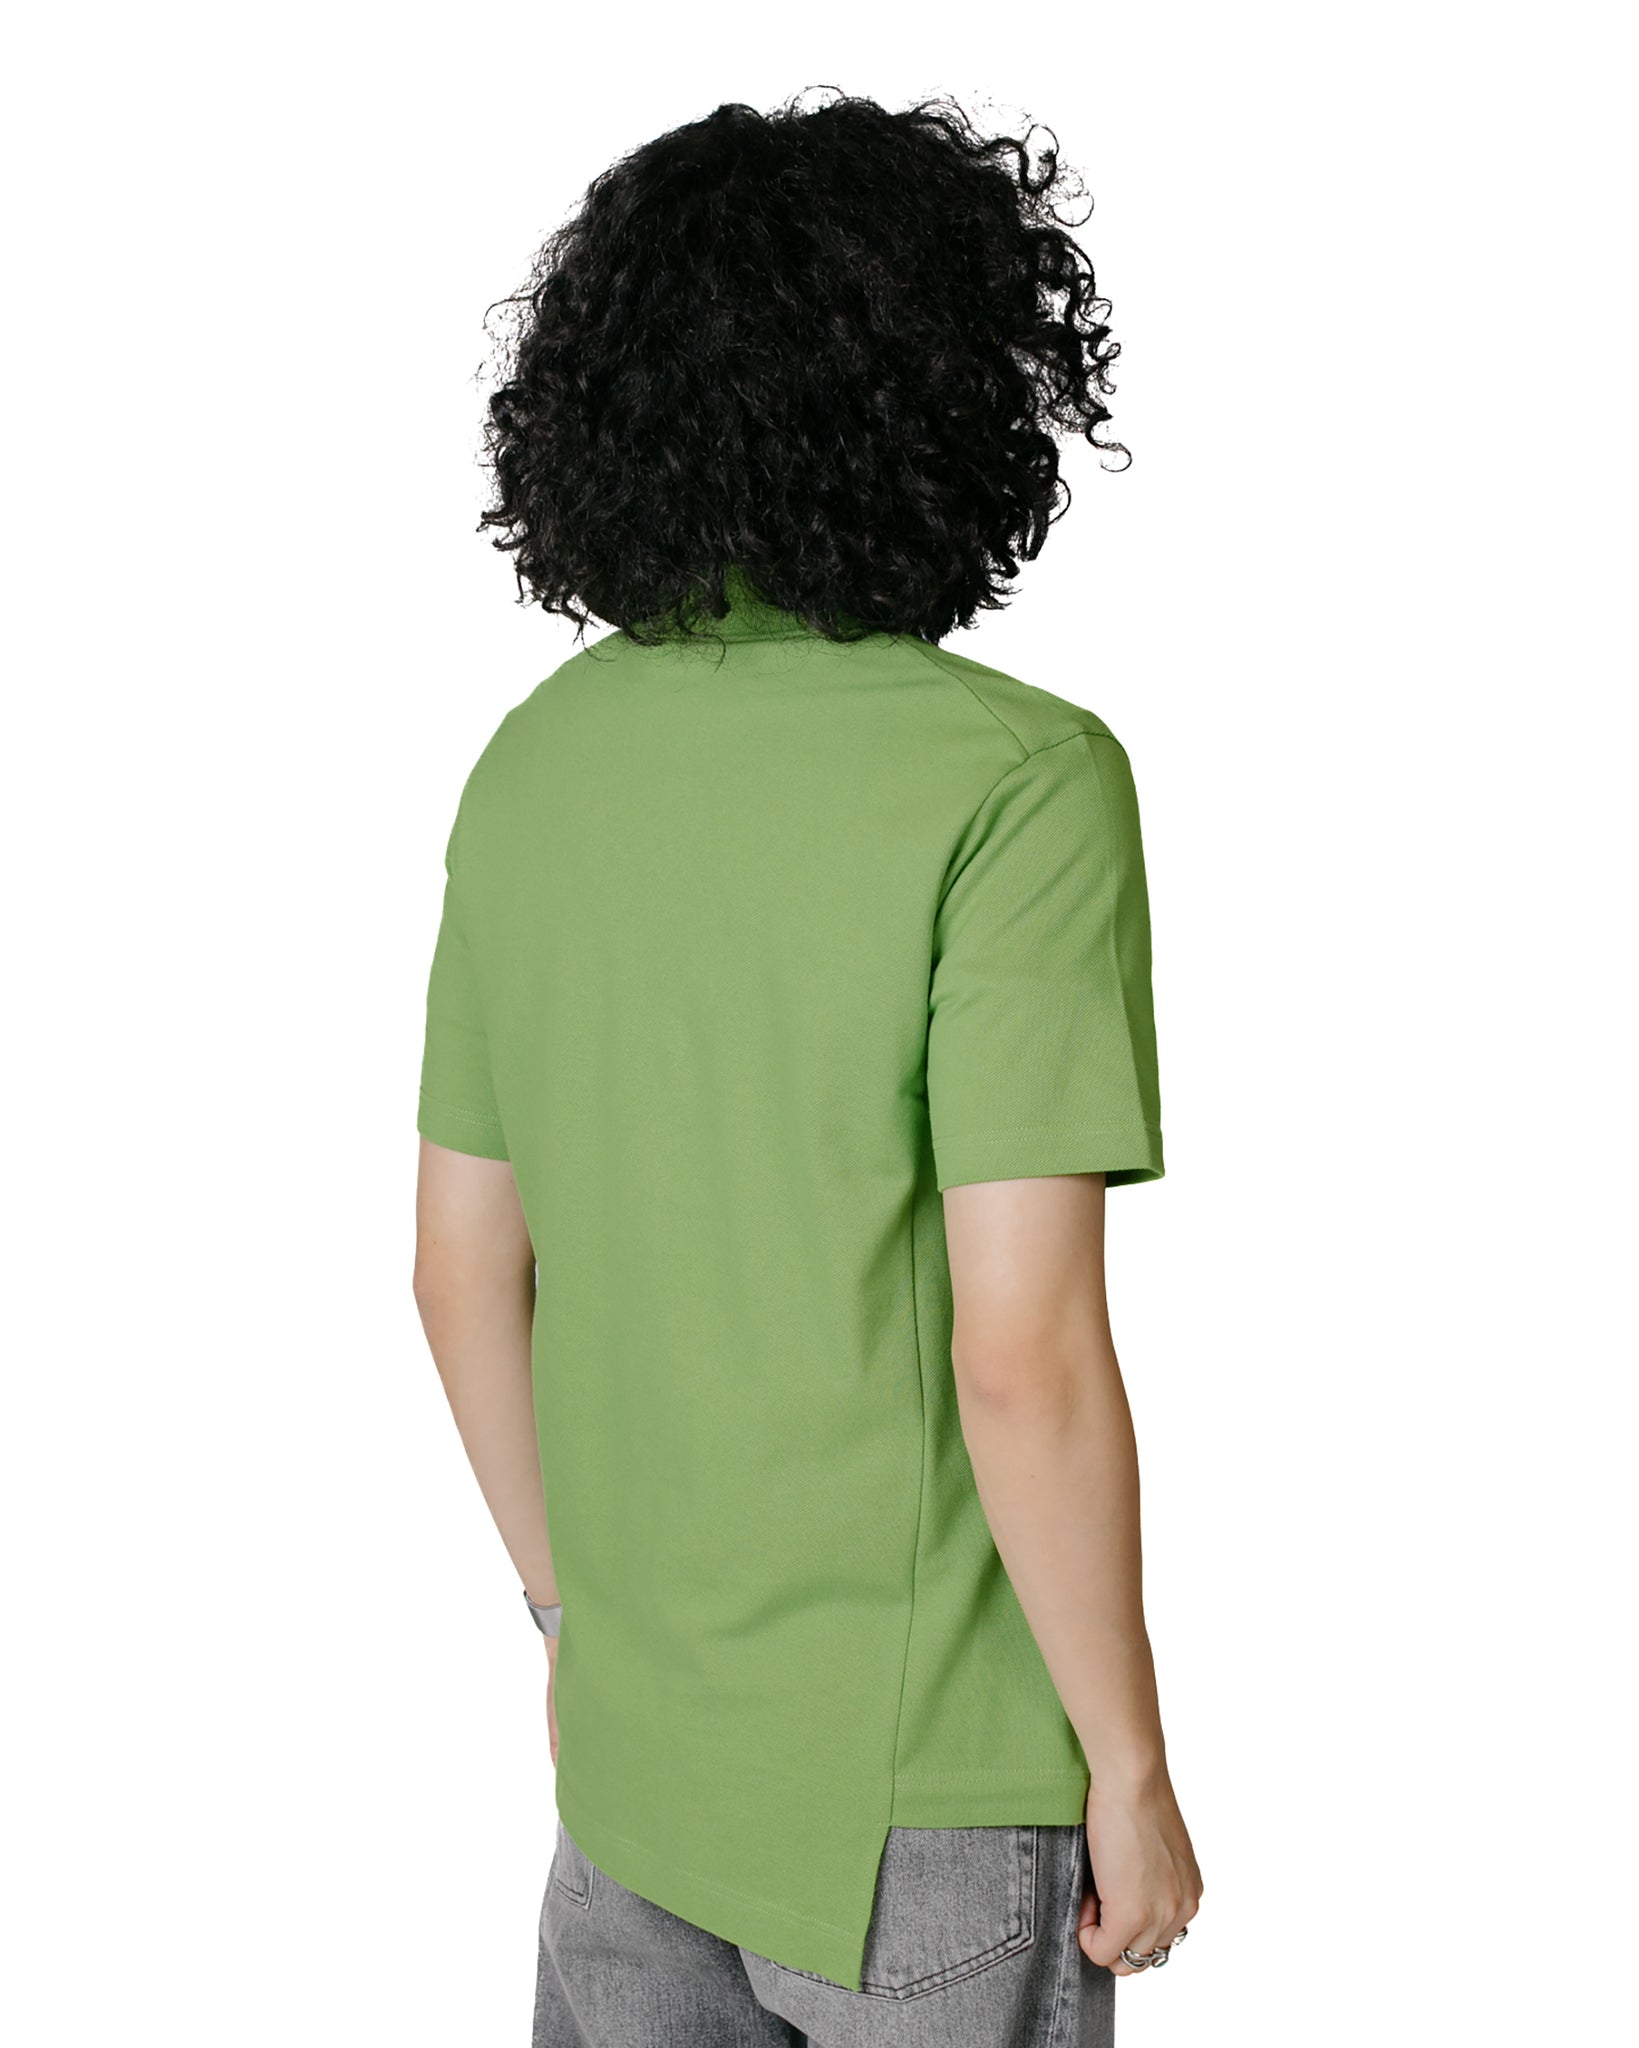 Comme des Garçons SHIRT x Lacoste Polo Shirt Green Model Back